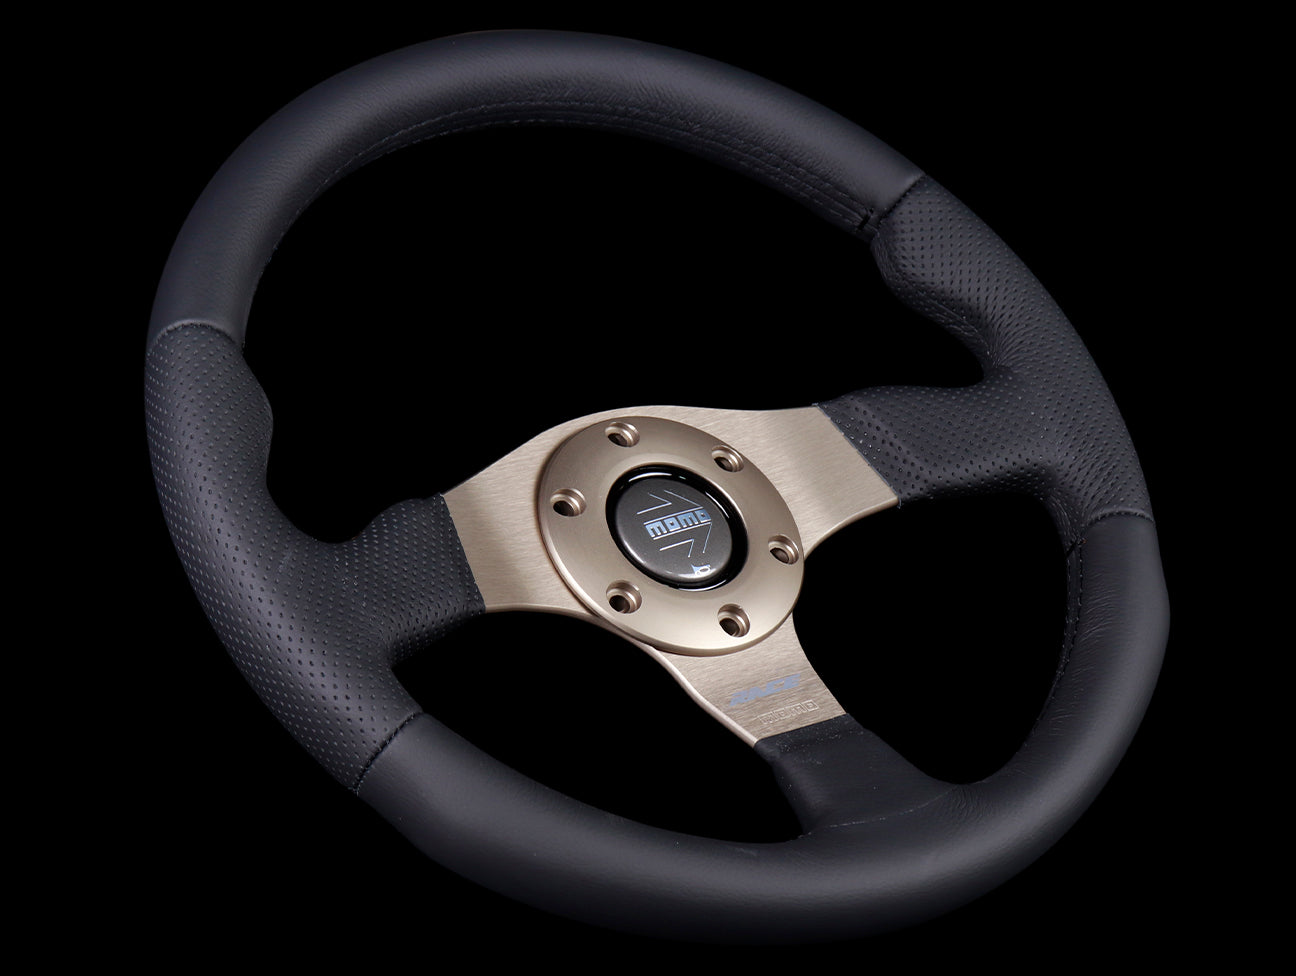 Momo Quark 350mm Steering Wheel